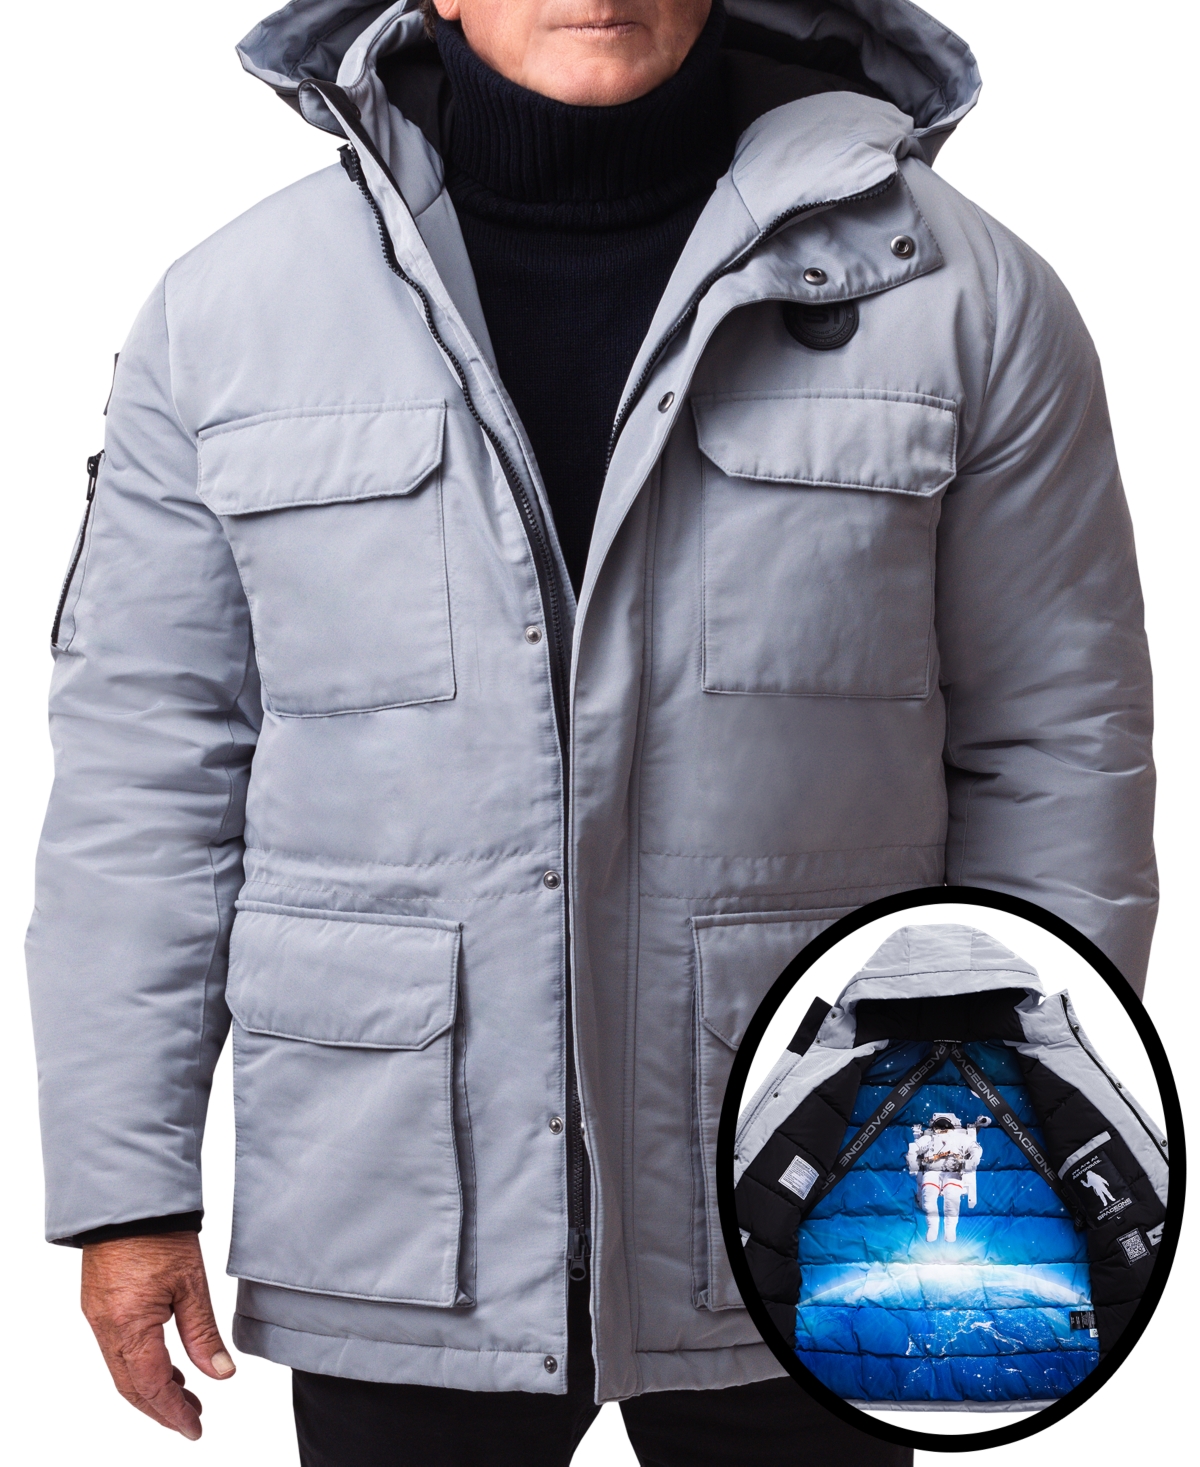 Men's Nasa Inspired Parka Jacket with Printed Astronaut Interior - White